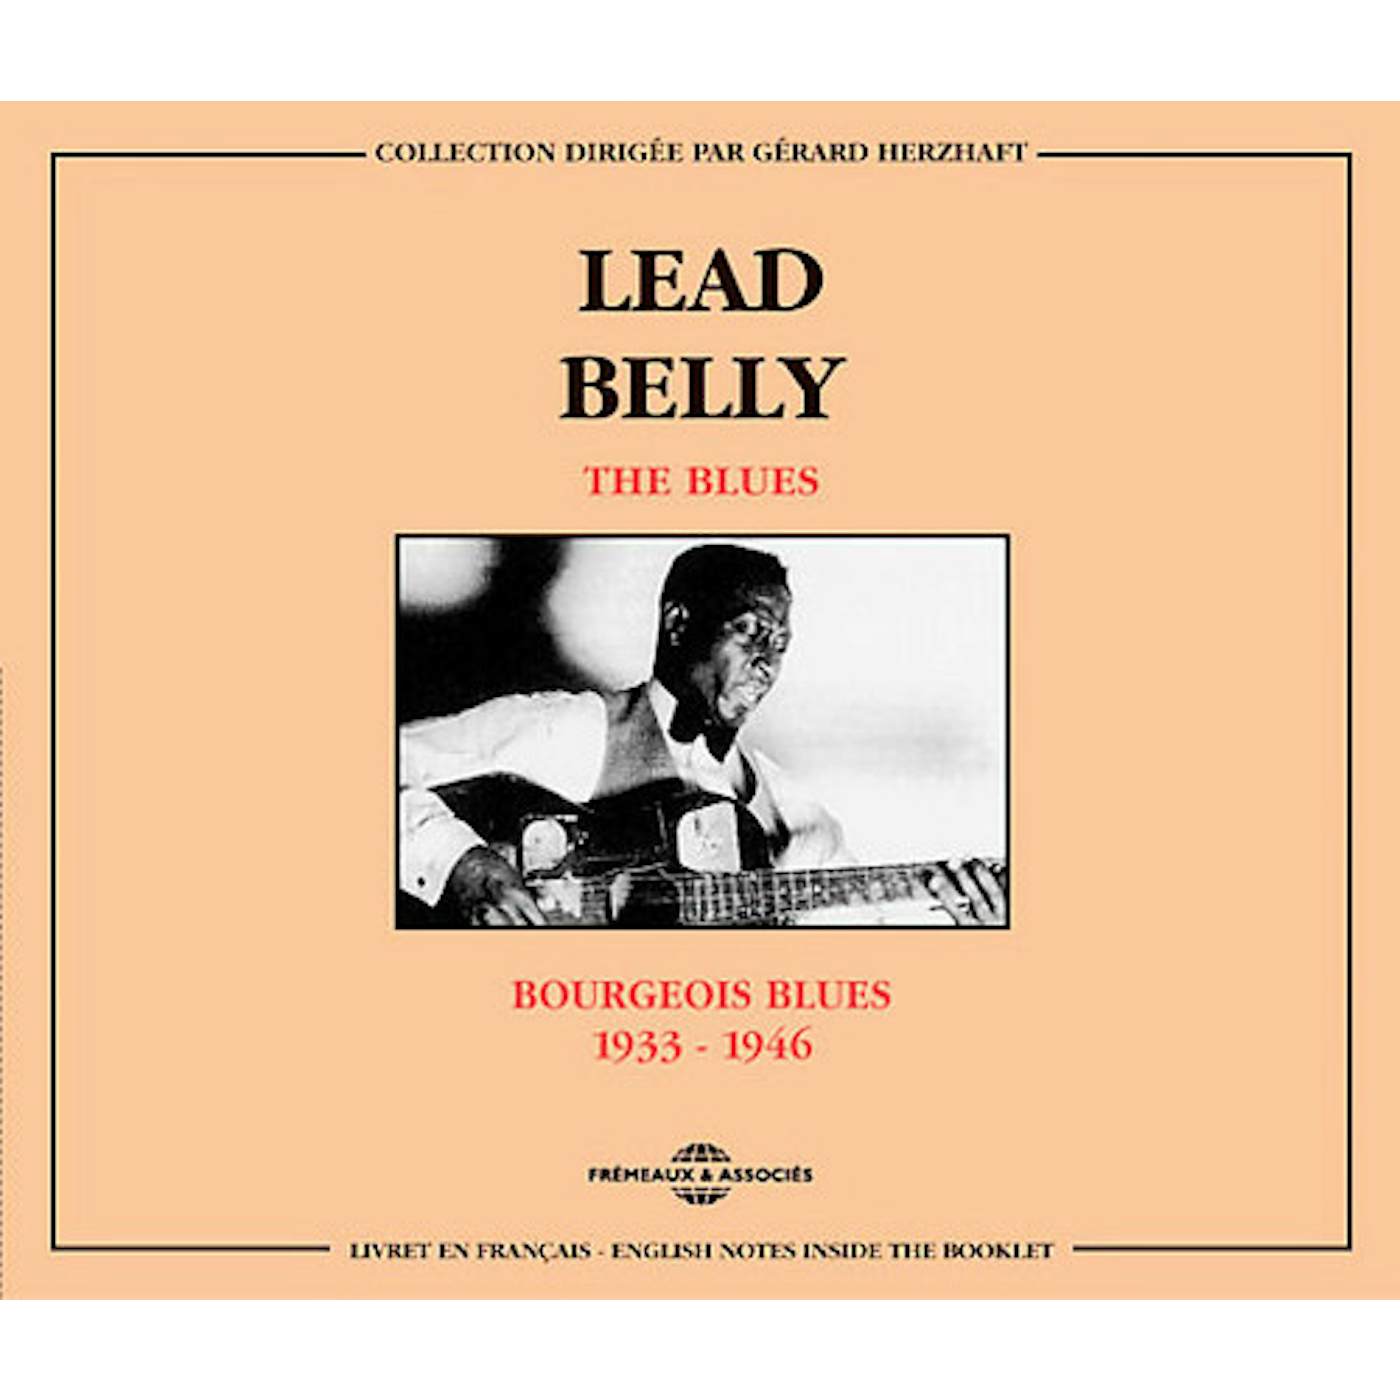 Leadbelly BOURGEOIS BLUES 1933-1946 CD